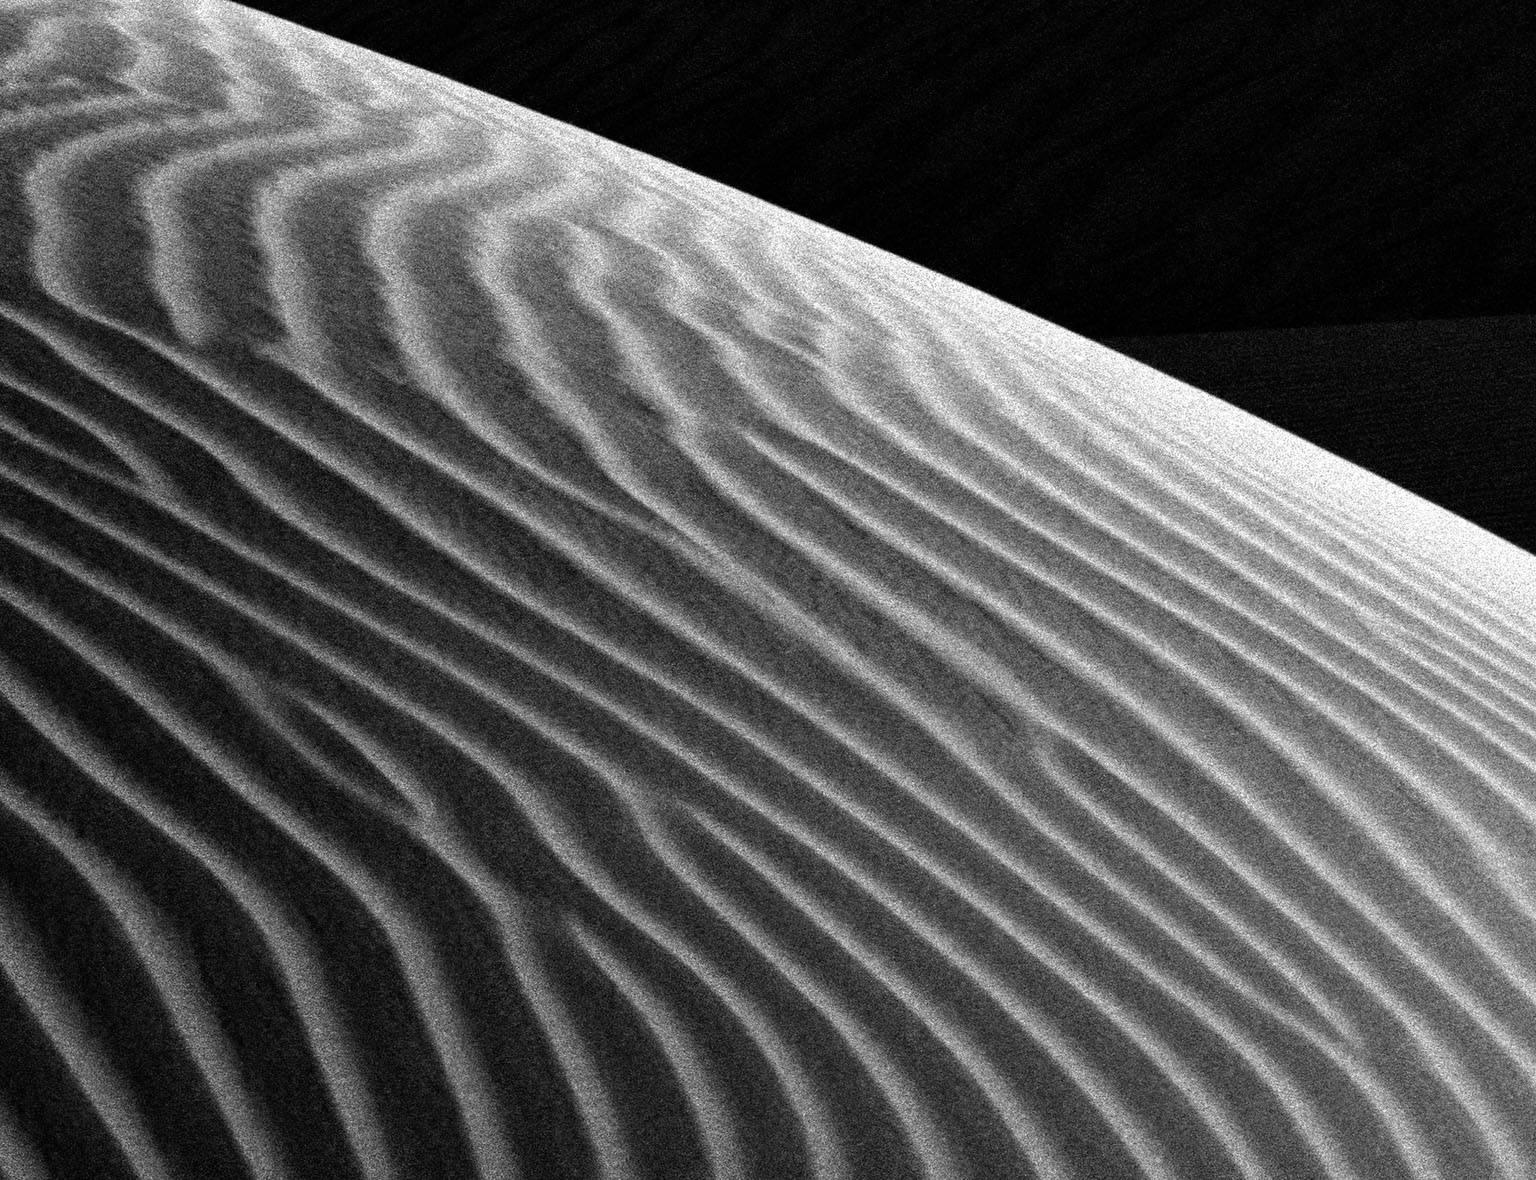 Sand Dunes Series #13 - Photograph by Keiji Iwai